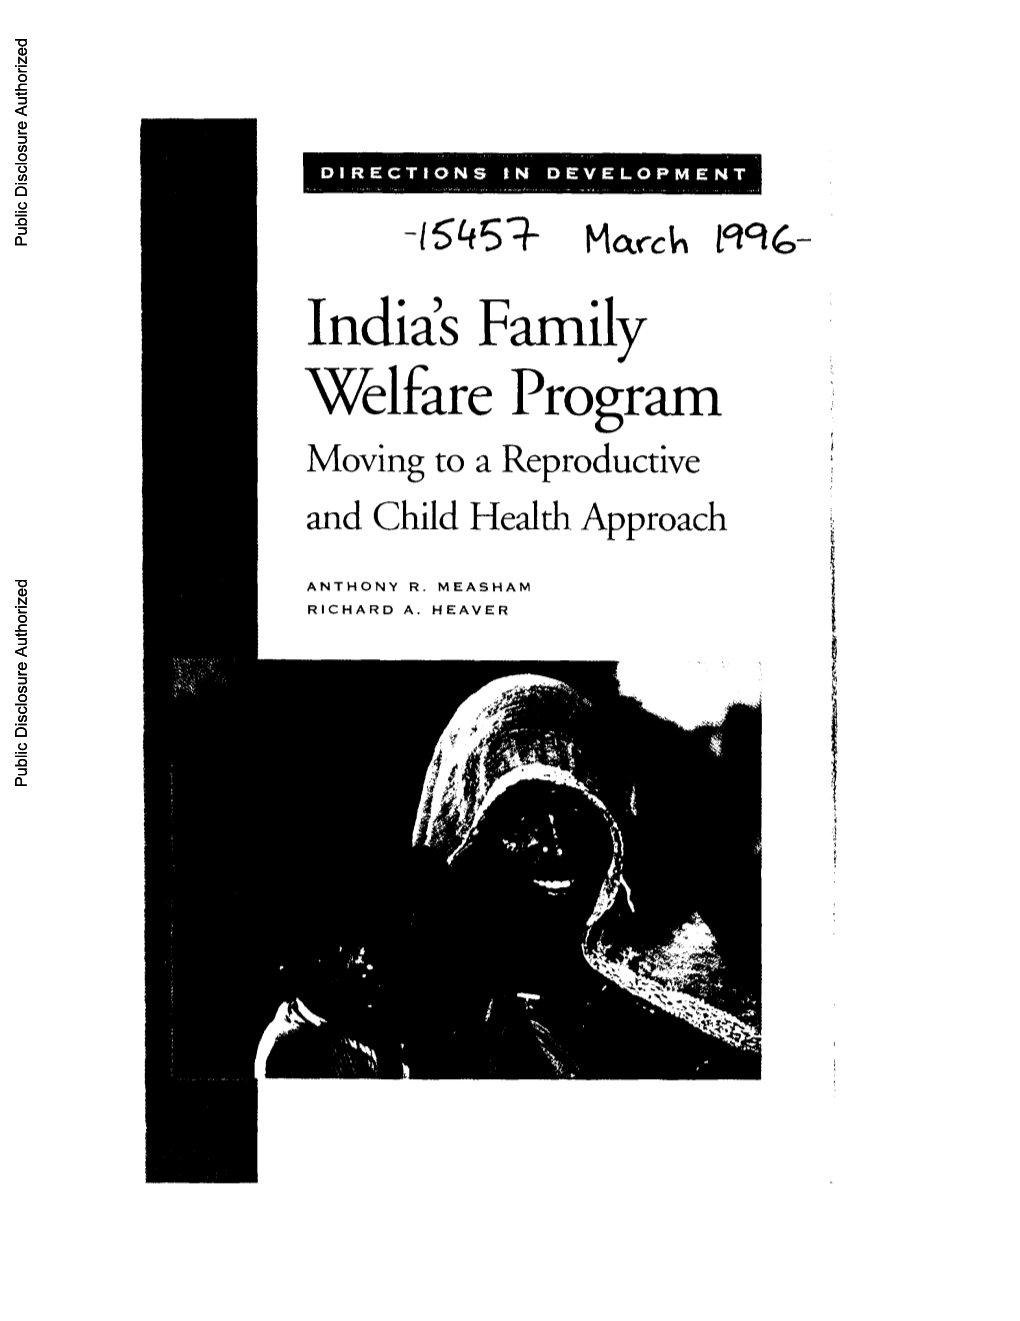 India's Family Welfare Program